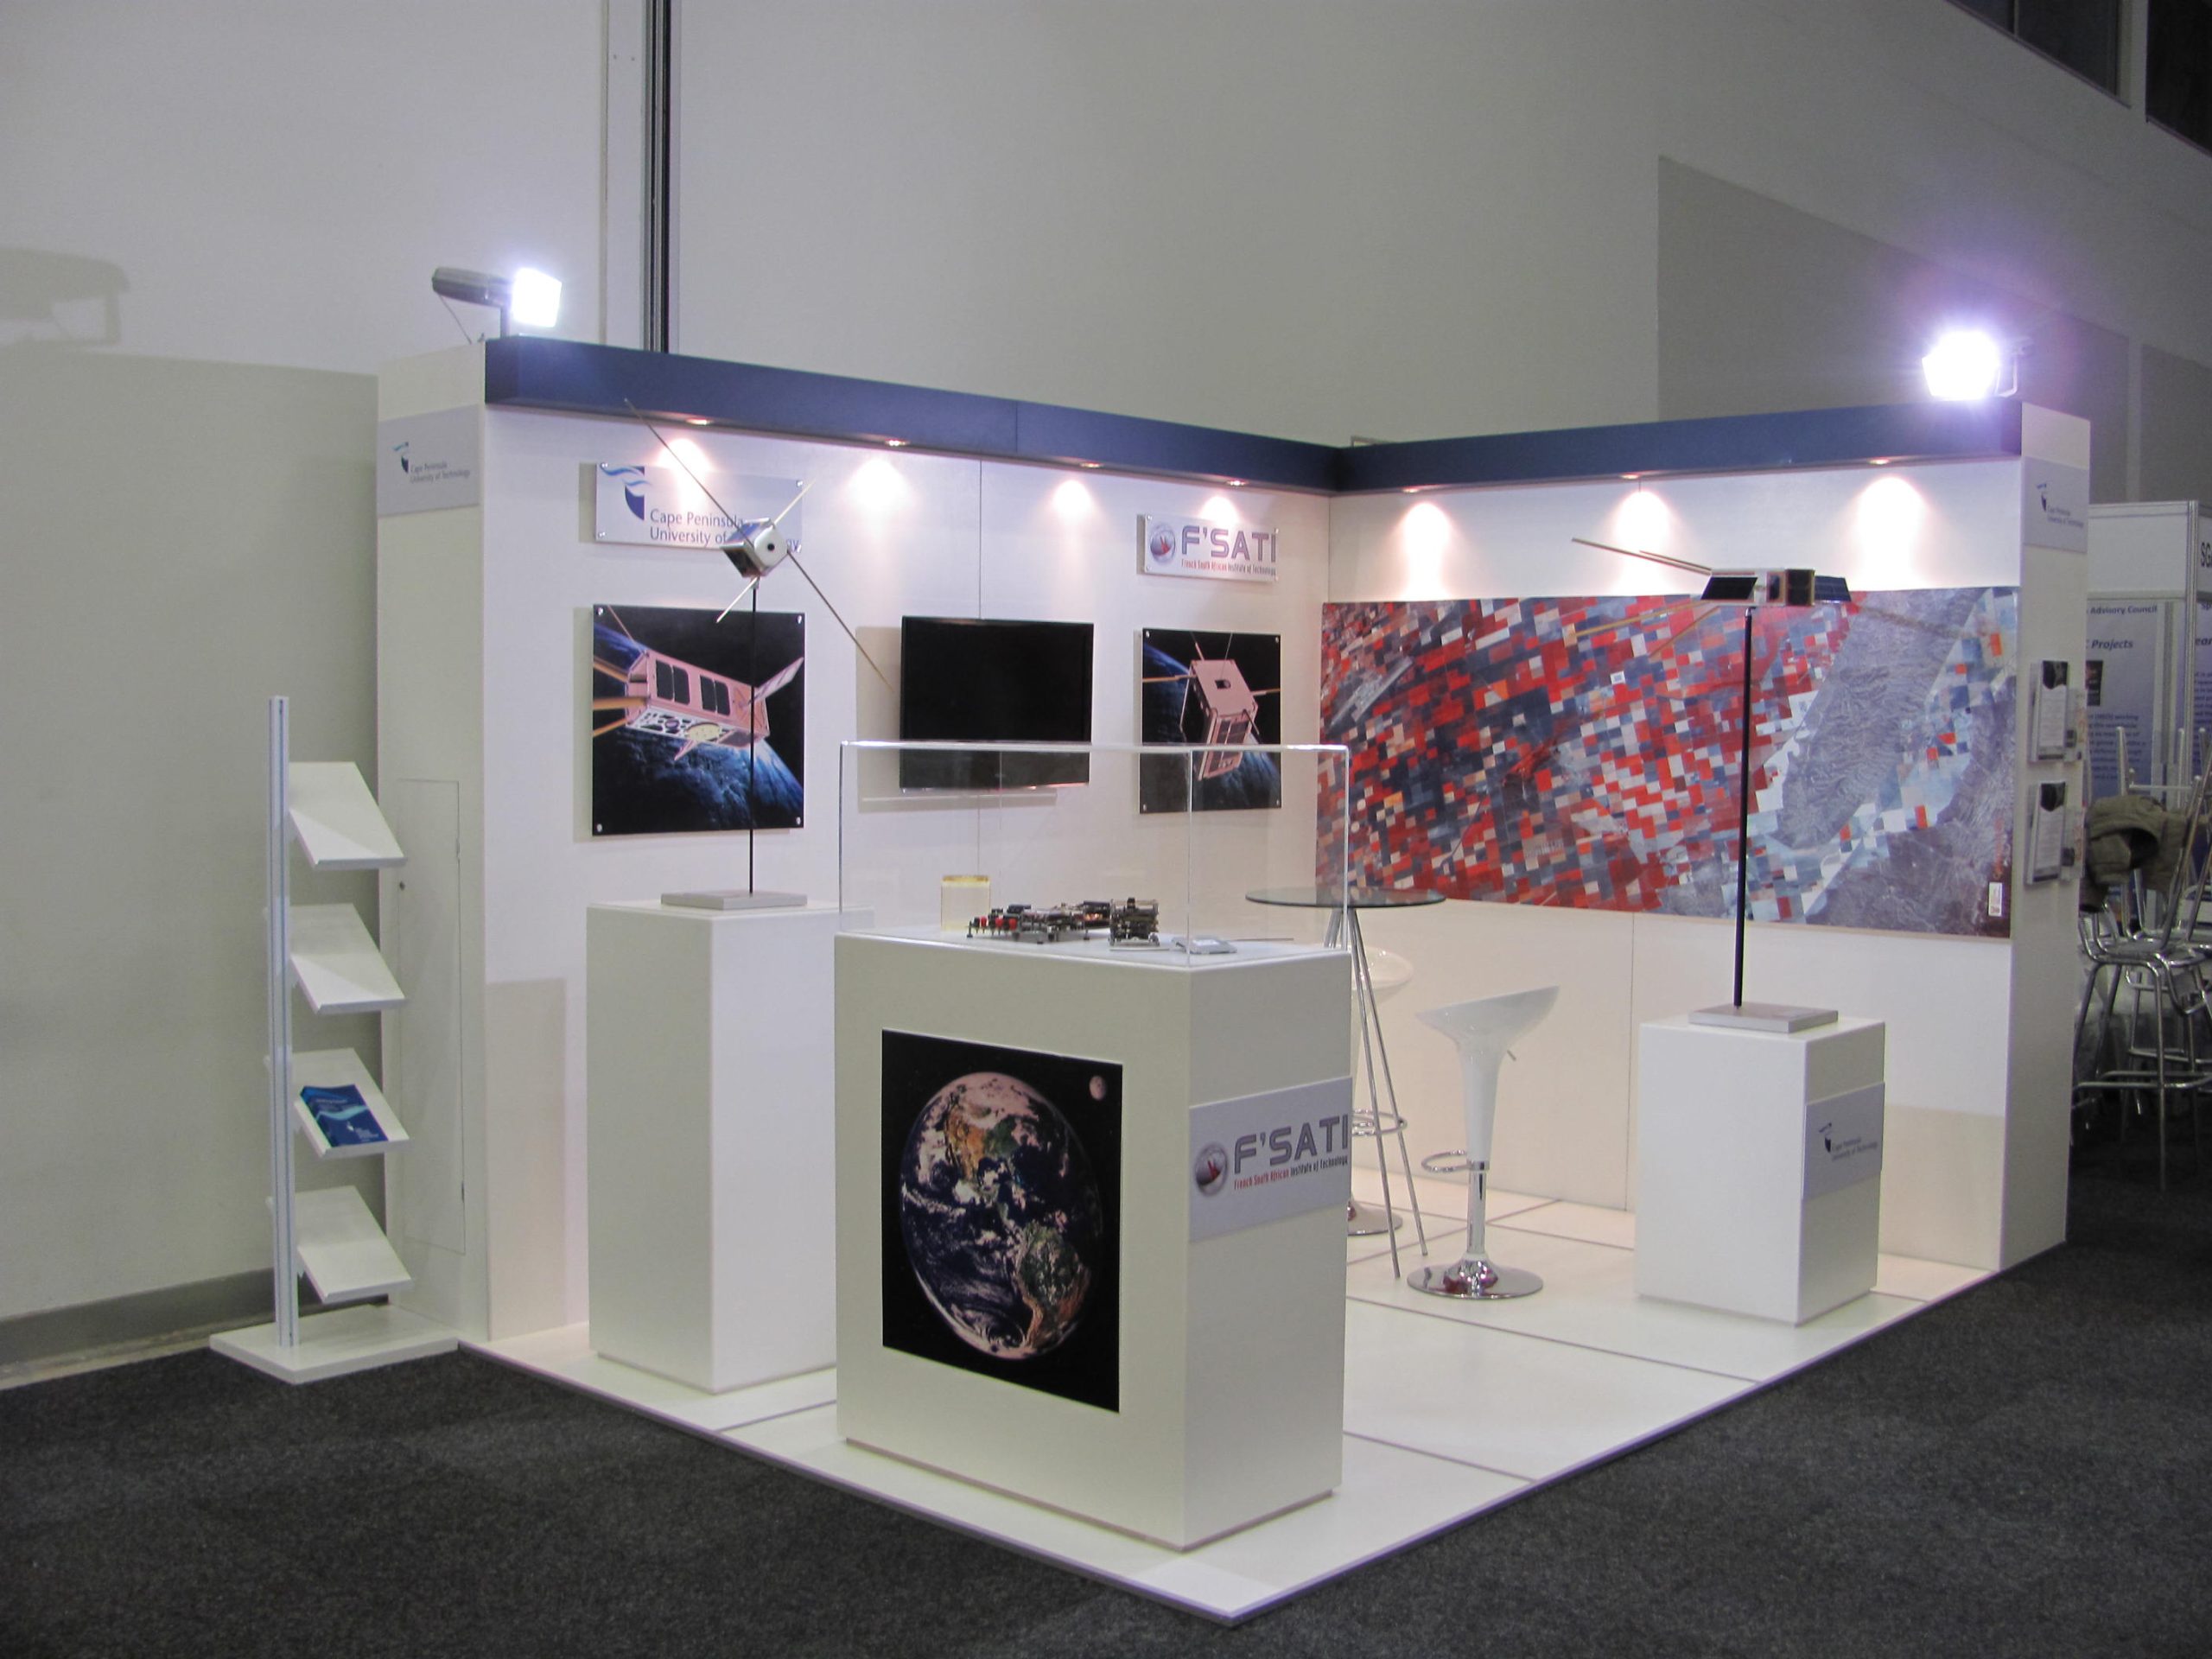 f-sati space exhibition stand